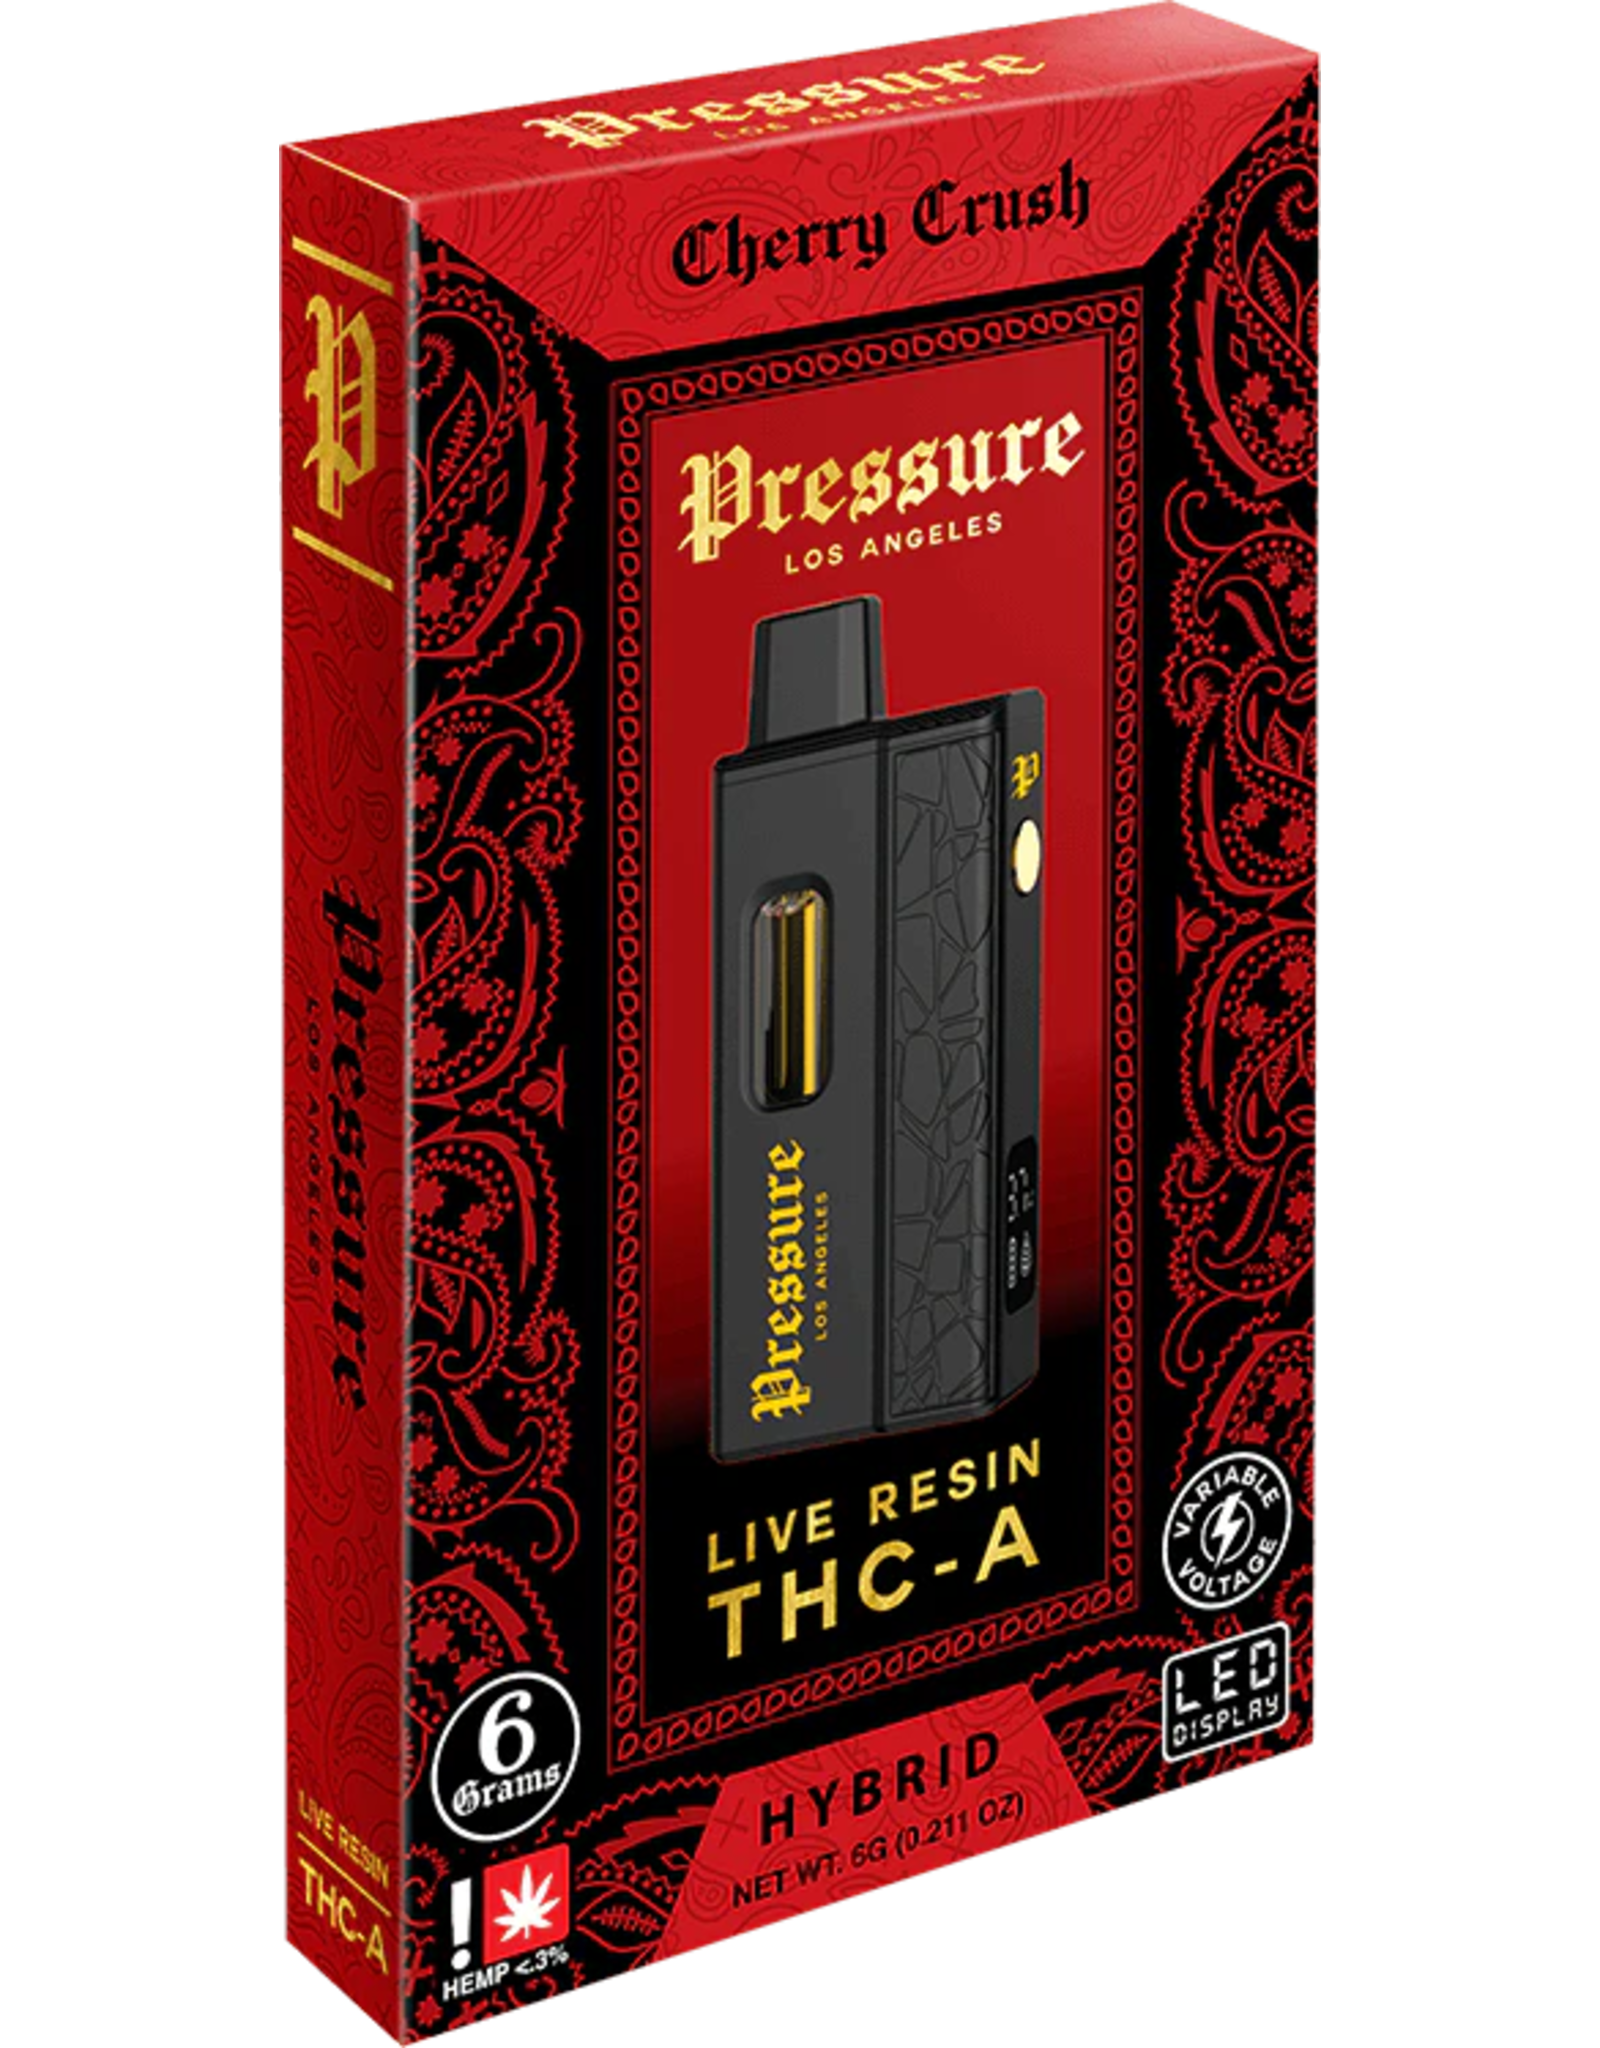 Pressure Pressure Live Resin THCA 6G Cherry Crush 5pk Box